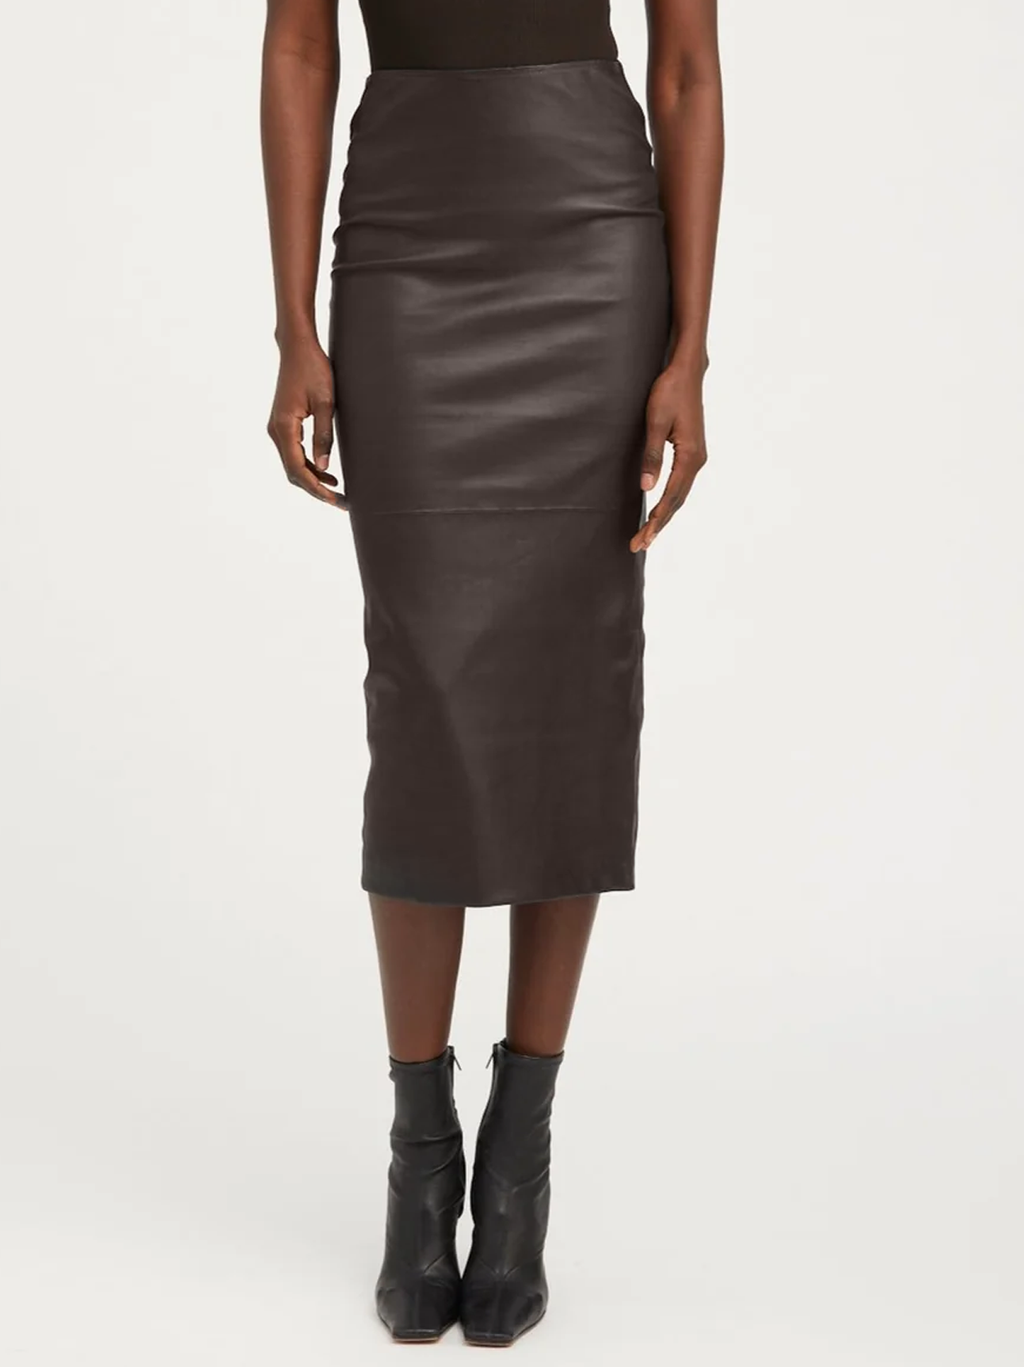 Dark Chocolate Leather Tube Skirt